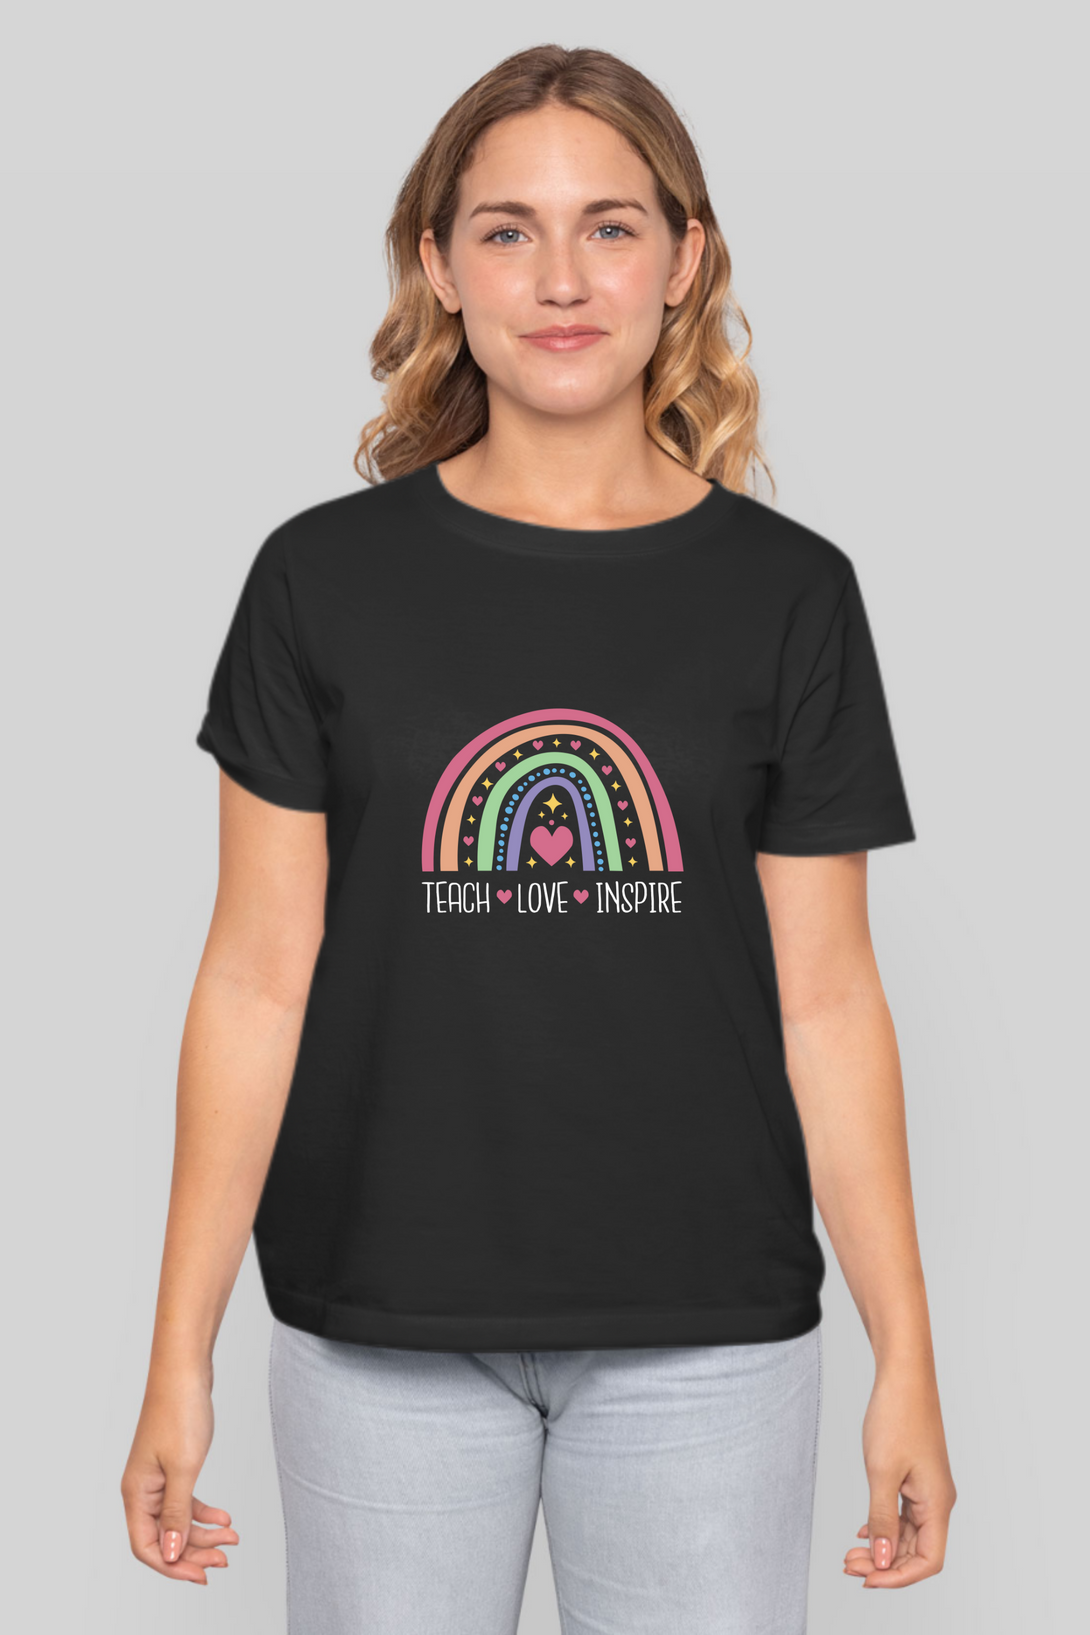 Teach, Love, Inspire Printed T-Shirt For Women - WowWaves - 7